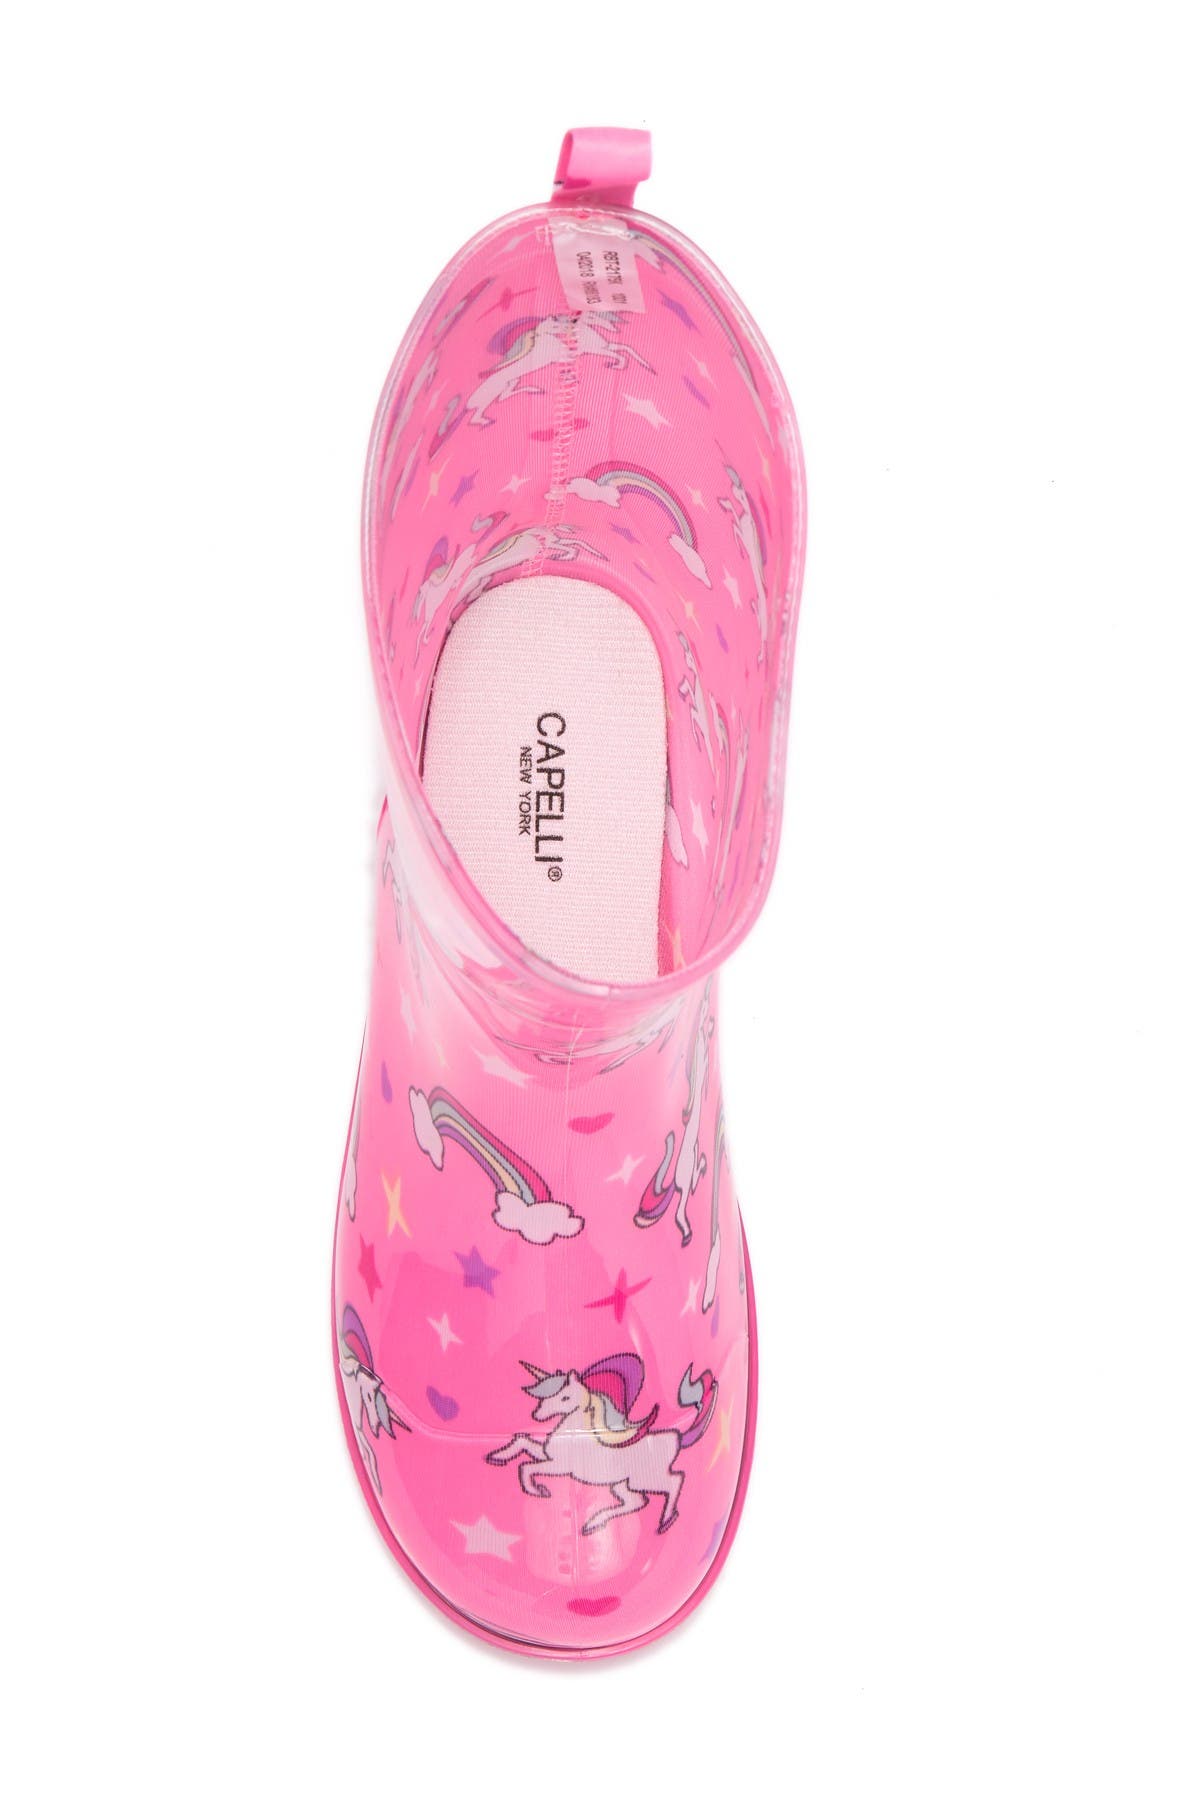 capelli unicorn shoes